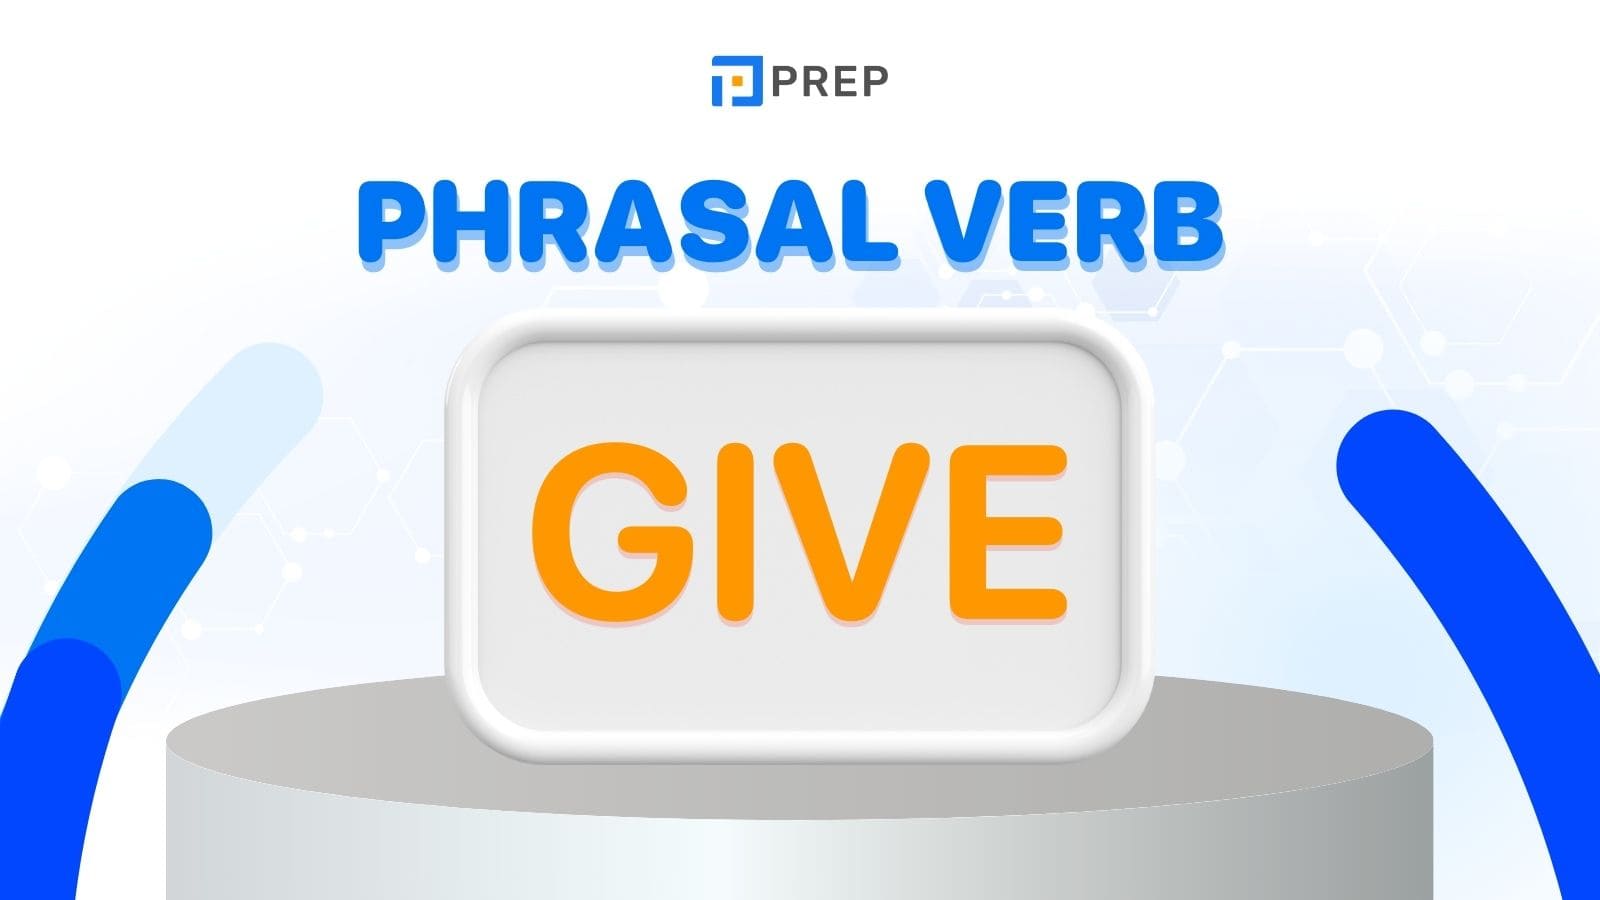 phrasal-verb-give.jpg